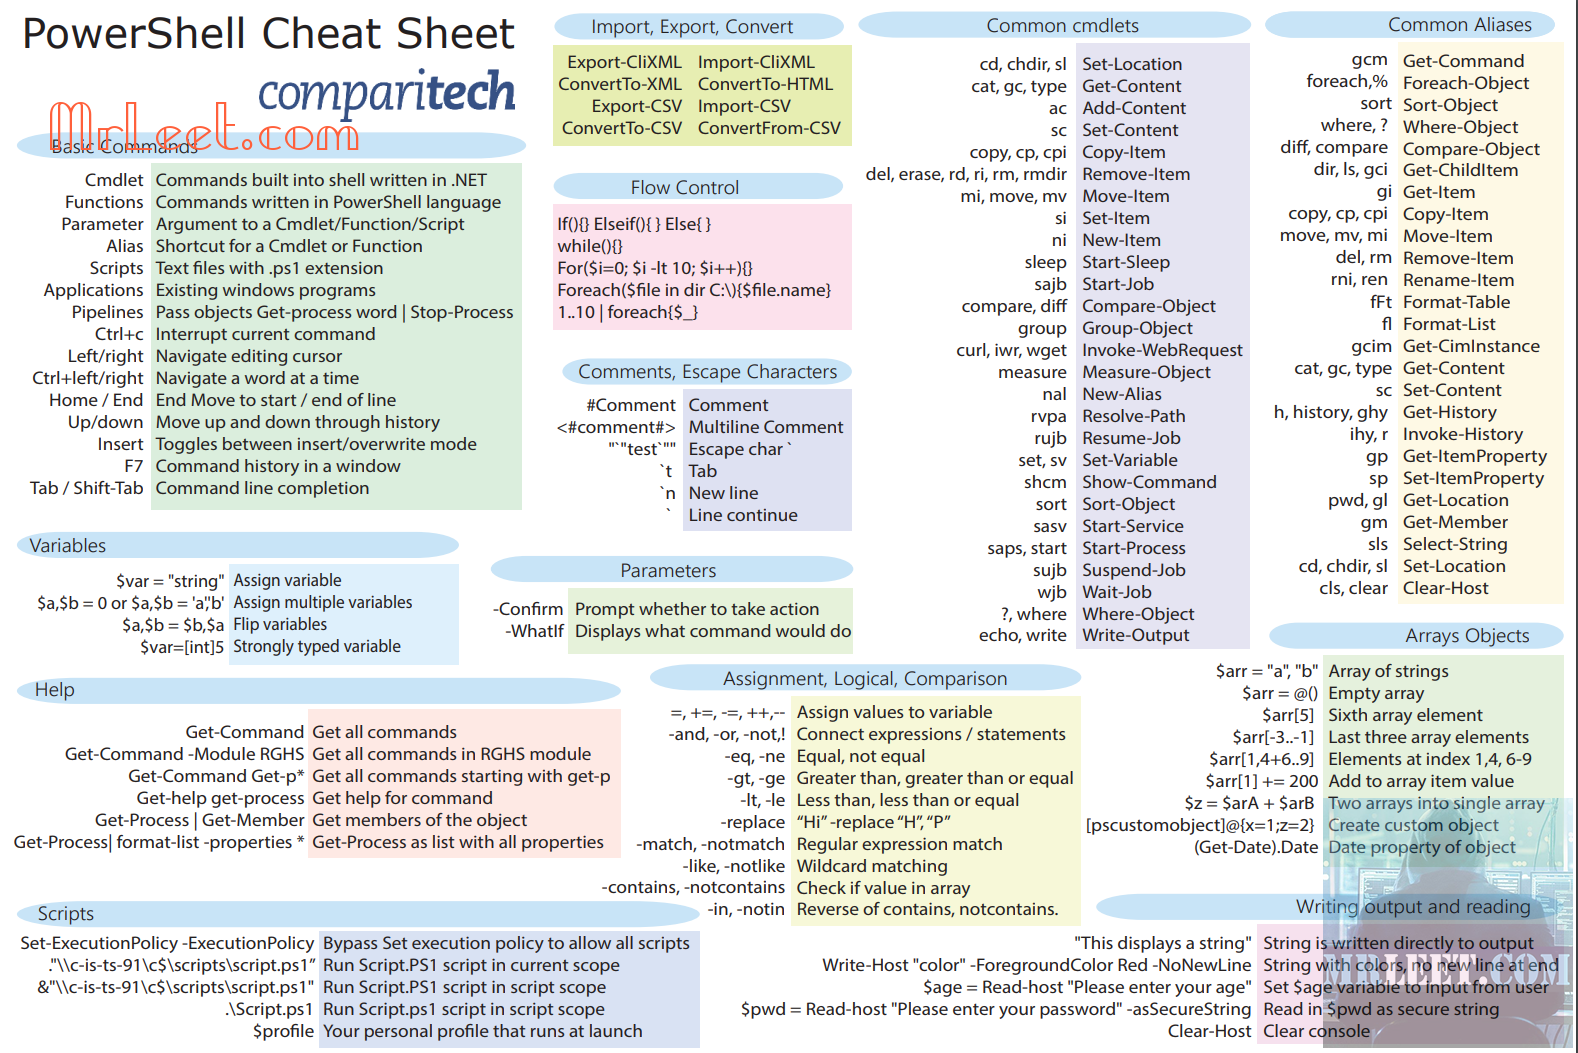 PowerShell cheat sheet